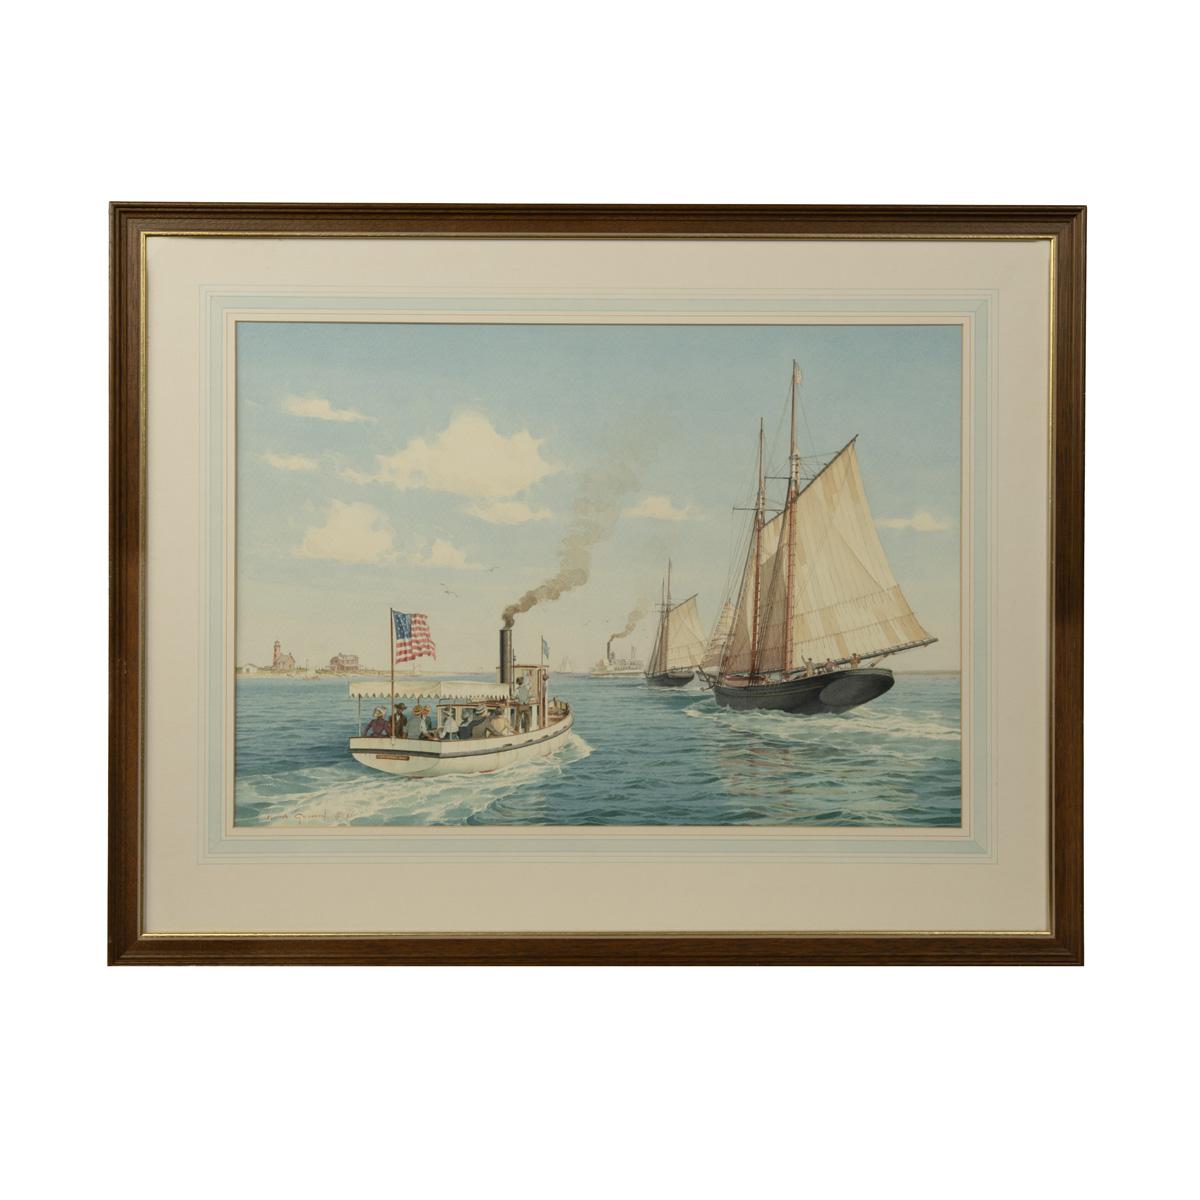 The Picnic, Island Belle, & the schooner Harry L Belden, Nantucket Harbour, U.S.A. (circa 1890) by K. A. Griffin